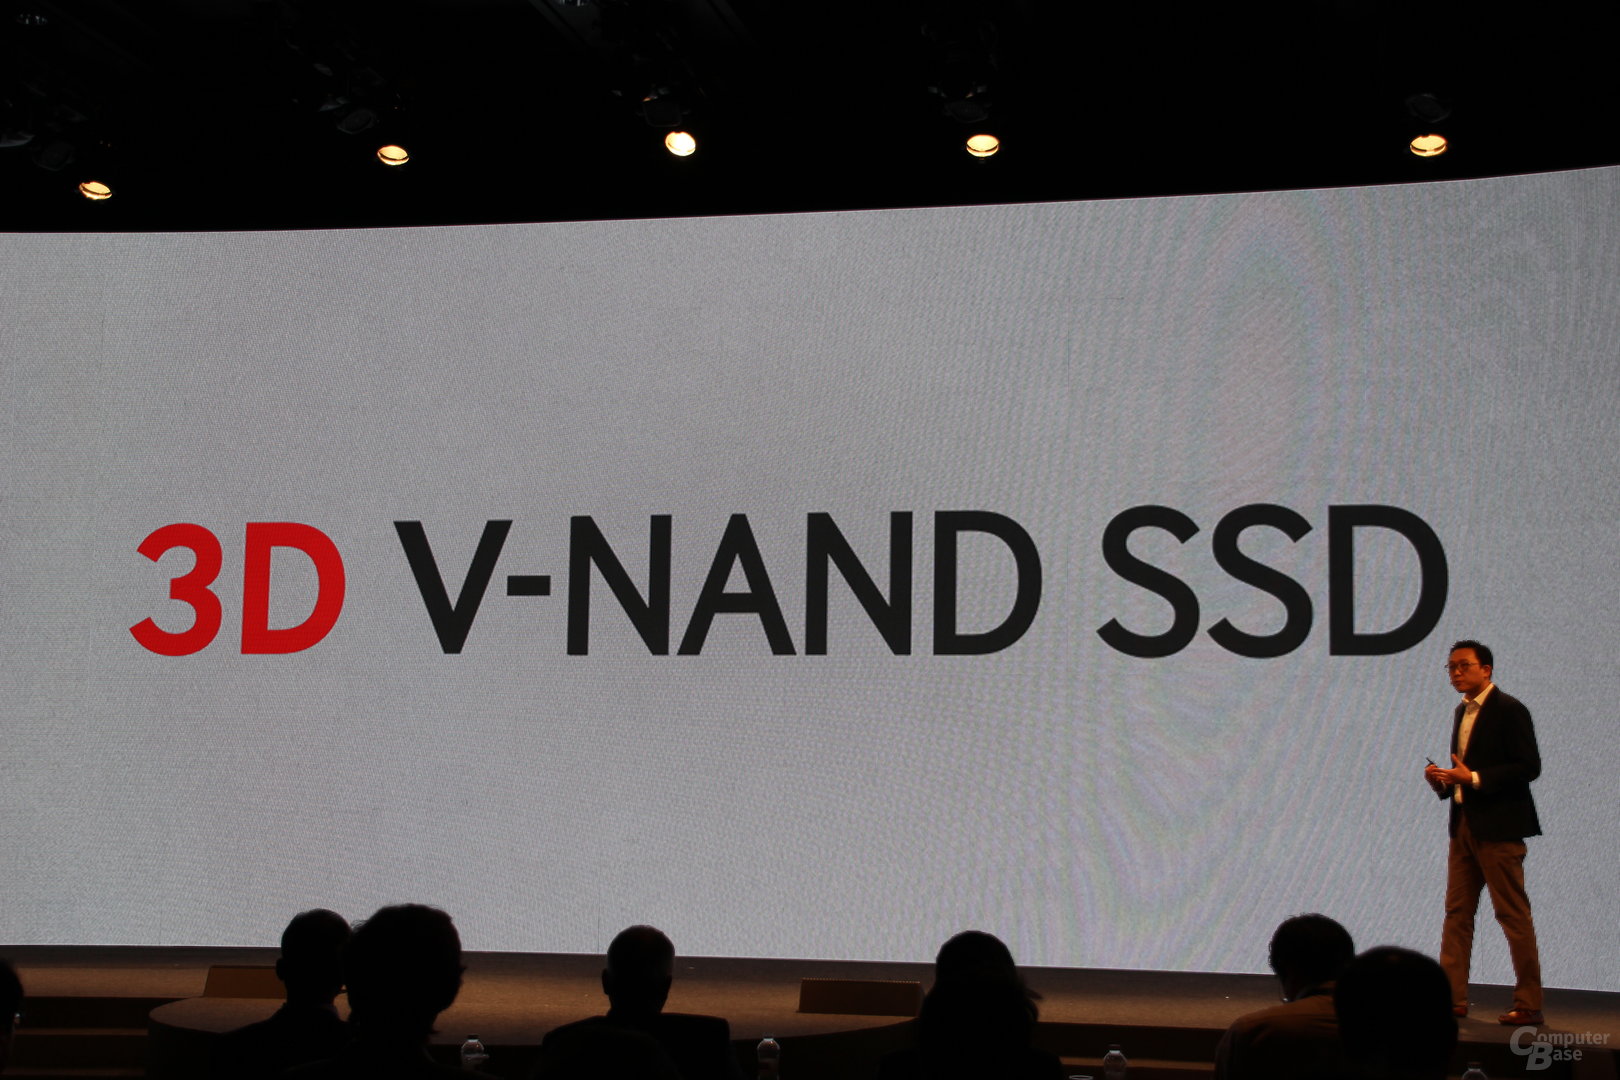 Samsung SSD Global Summit 2015